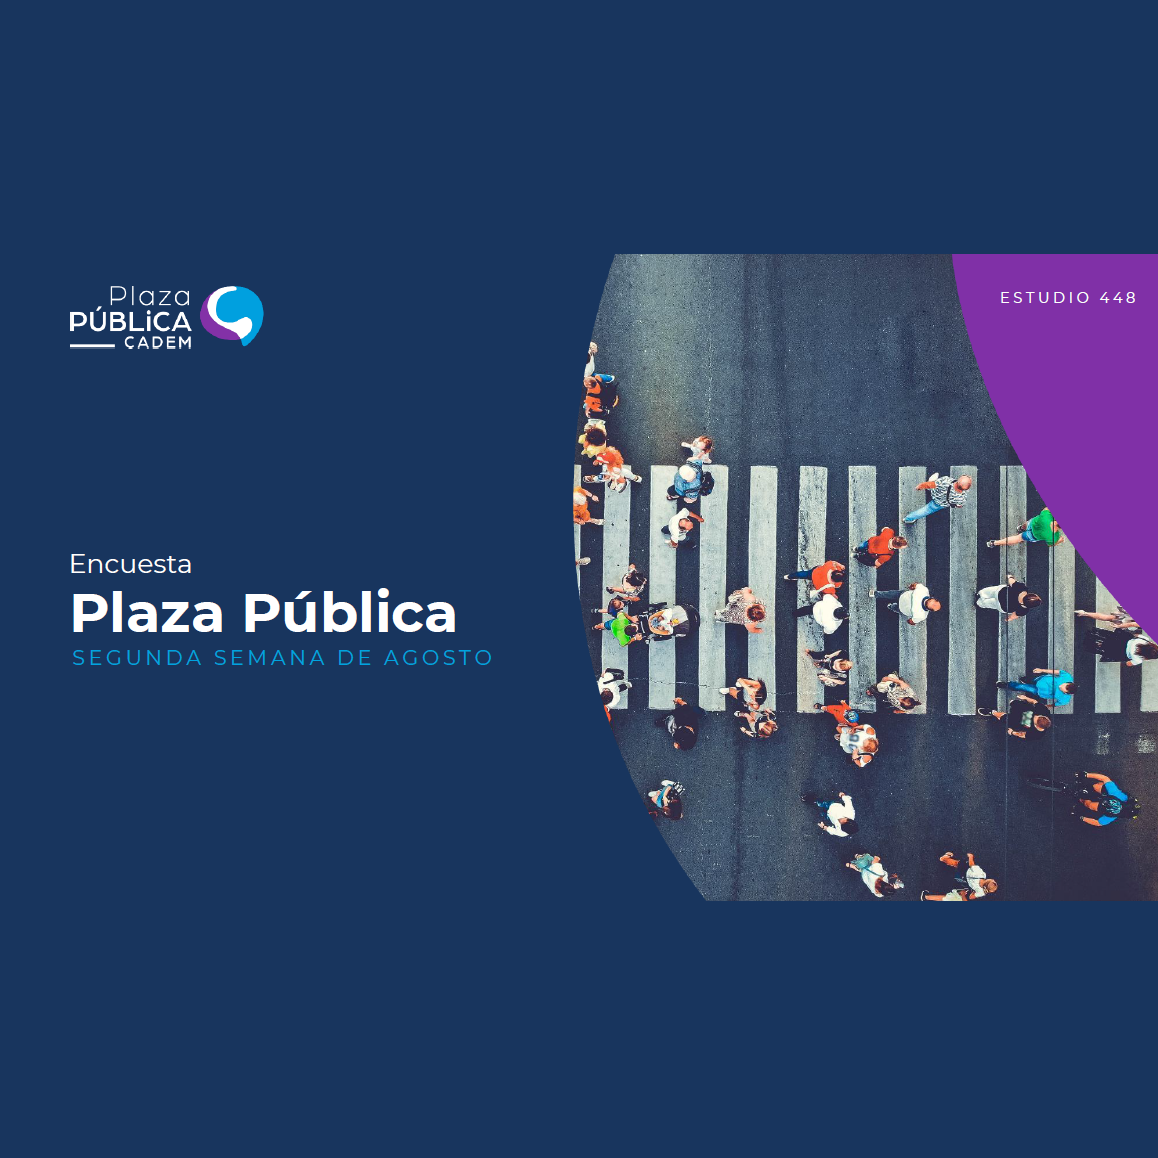 Estudio: Plaza pública Cadem – Segunda semana de agosto